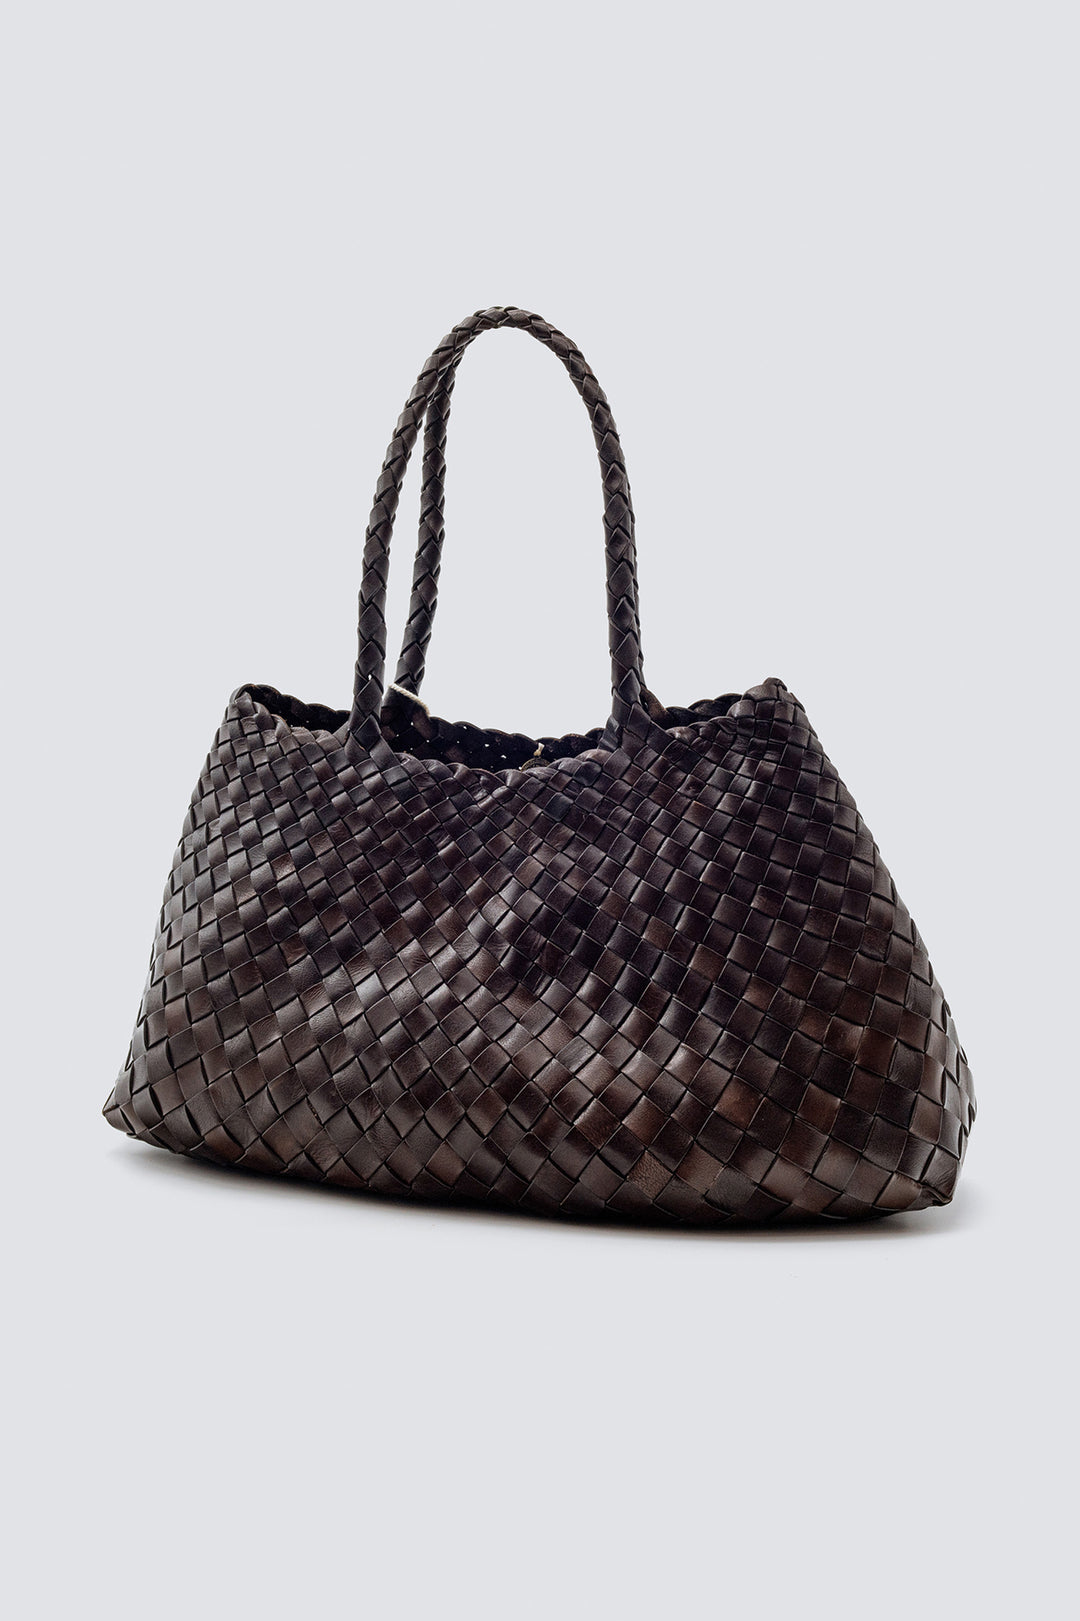 Dragon Diffusion woven leather bag  handmade - Santa Croce Big Dark Brown